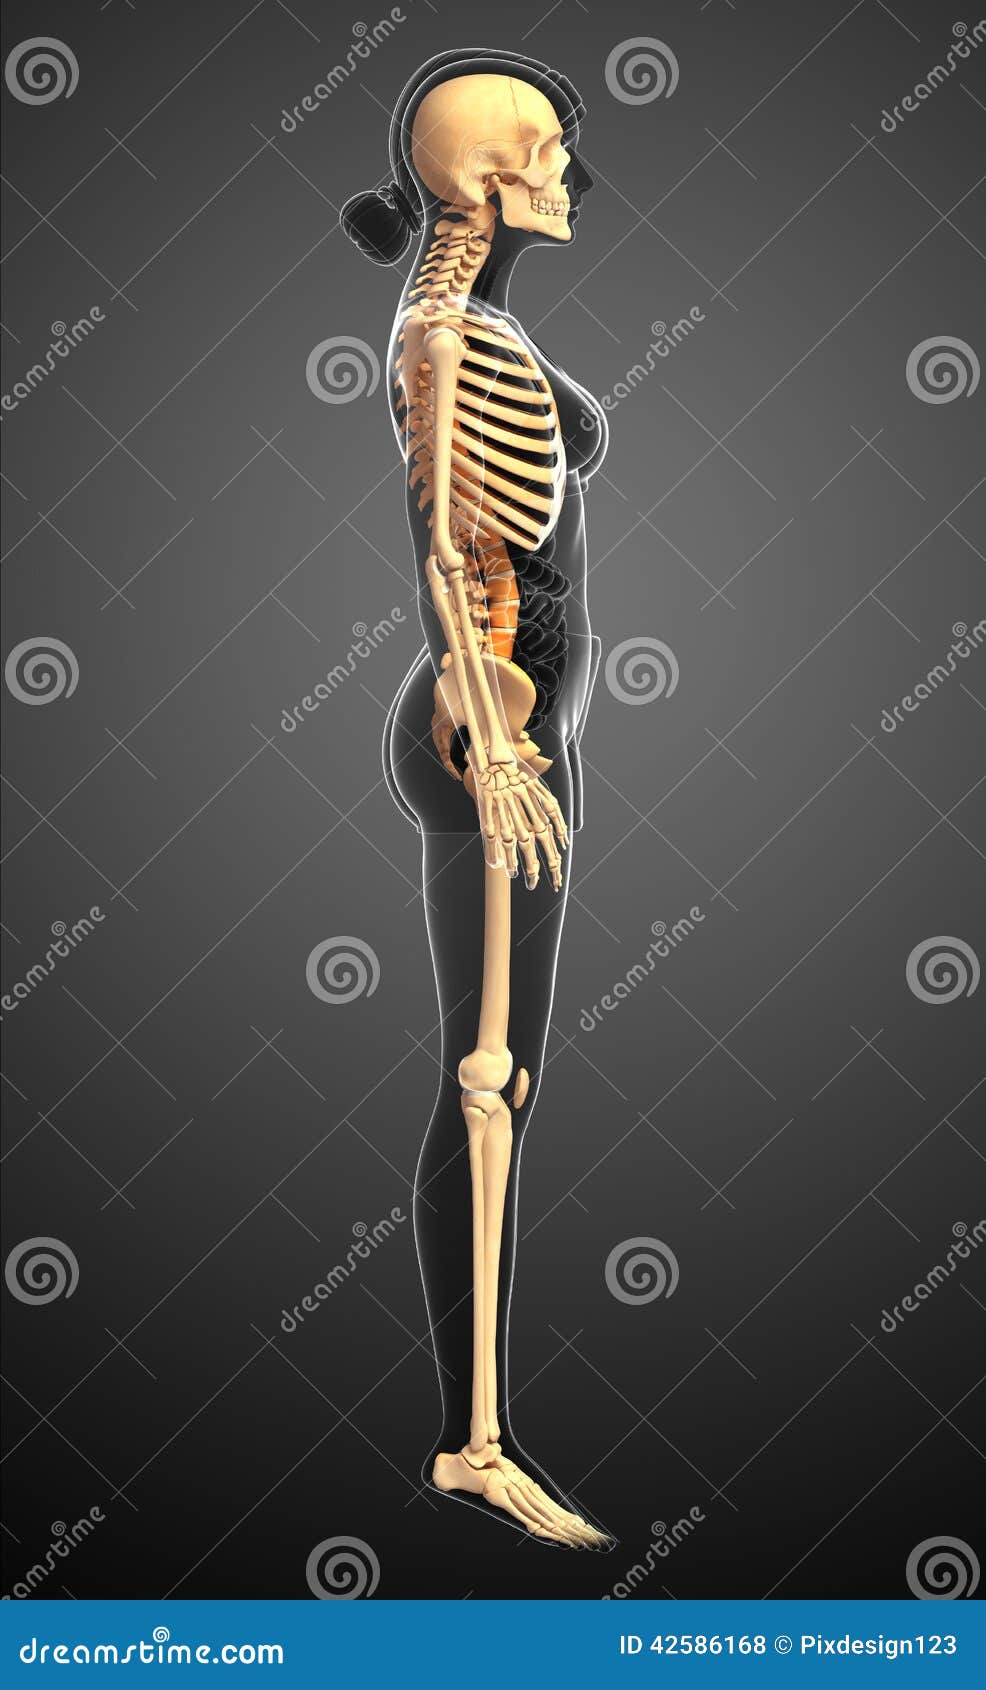 Royalty Free Stock Photos: Human skeleton side view. Image: 42586168